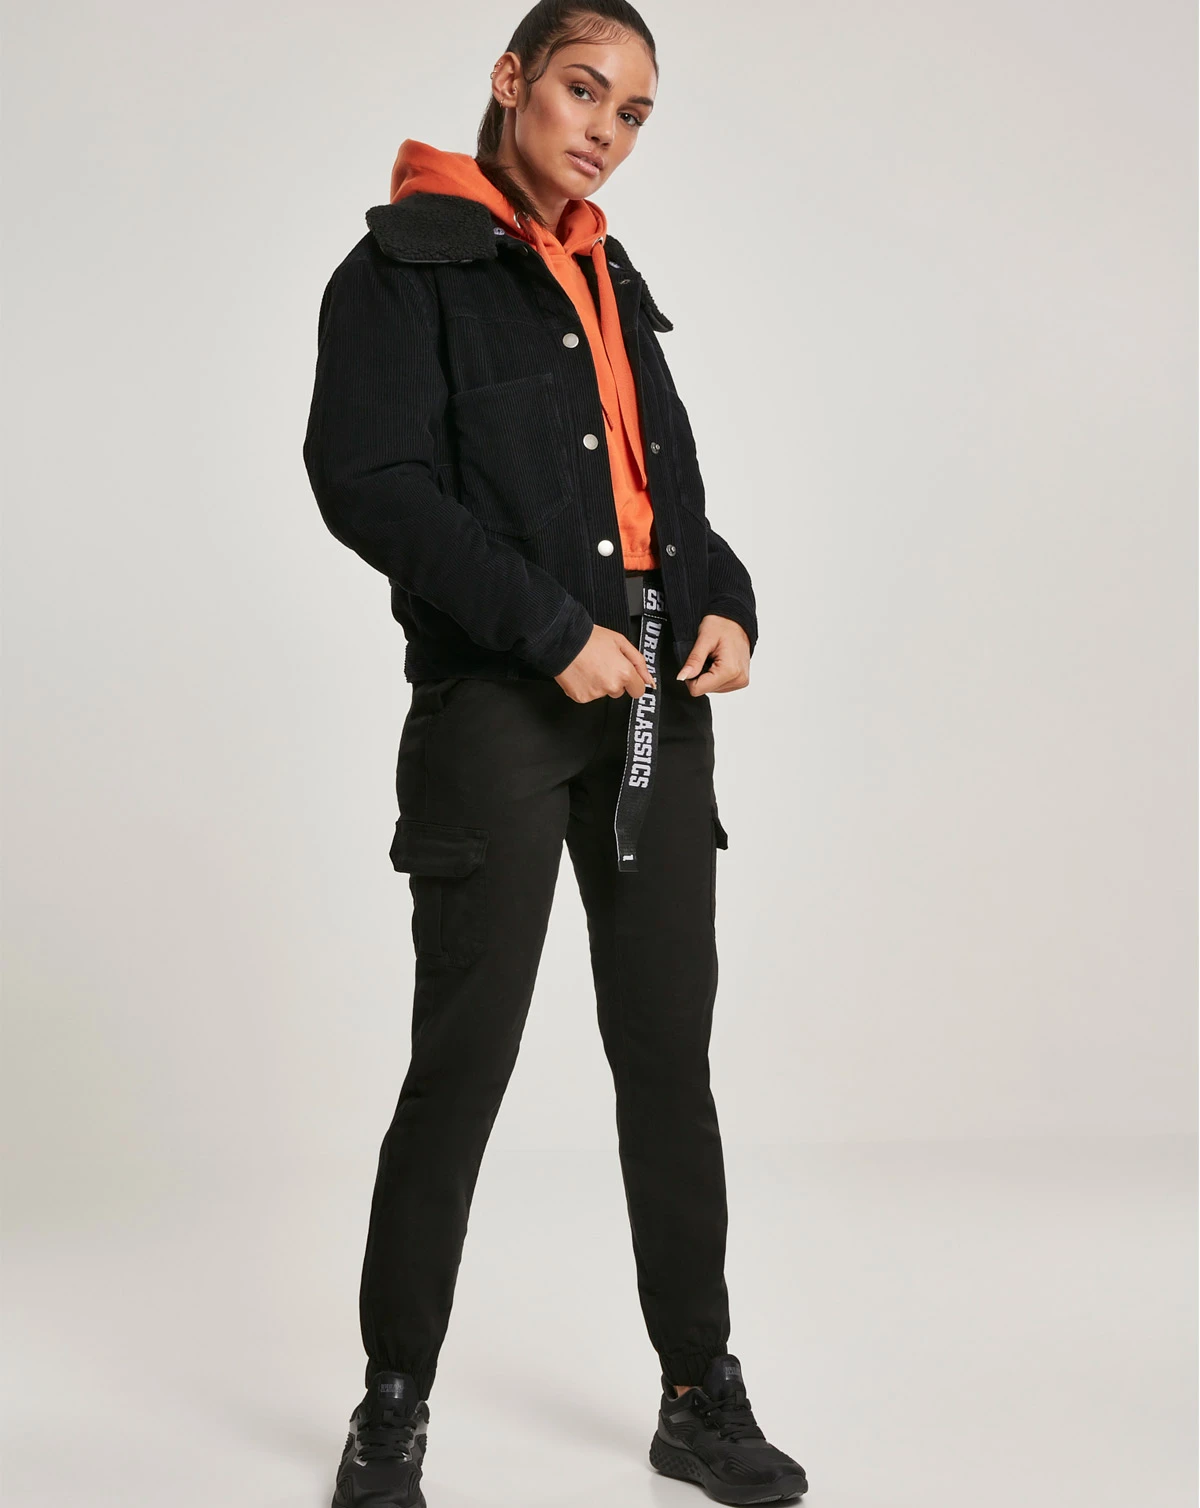 Jacket Back Money | Urban Guarantee ARMY Classics Corduroy Buy Sherpa STAR Ladies | Oversized